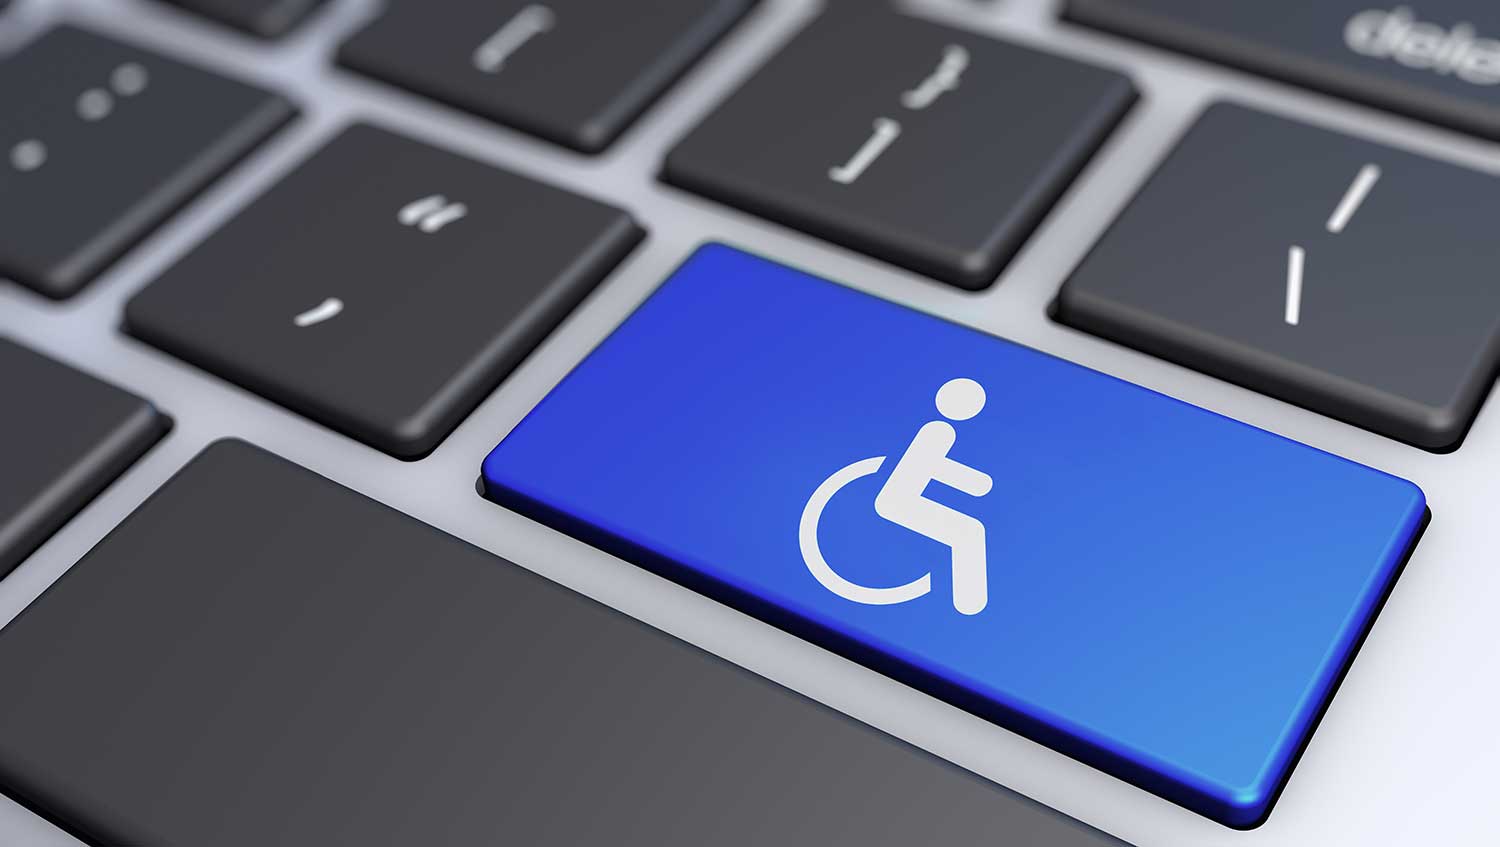 Computer Keyboard Return Key Displaying Accessibility Logo of wheelchair user